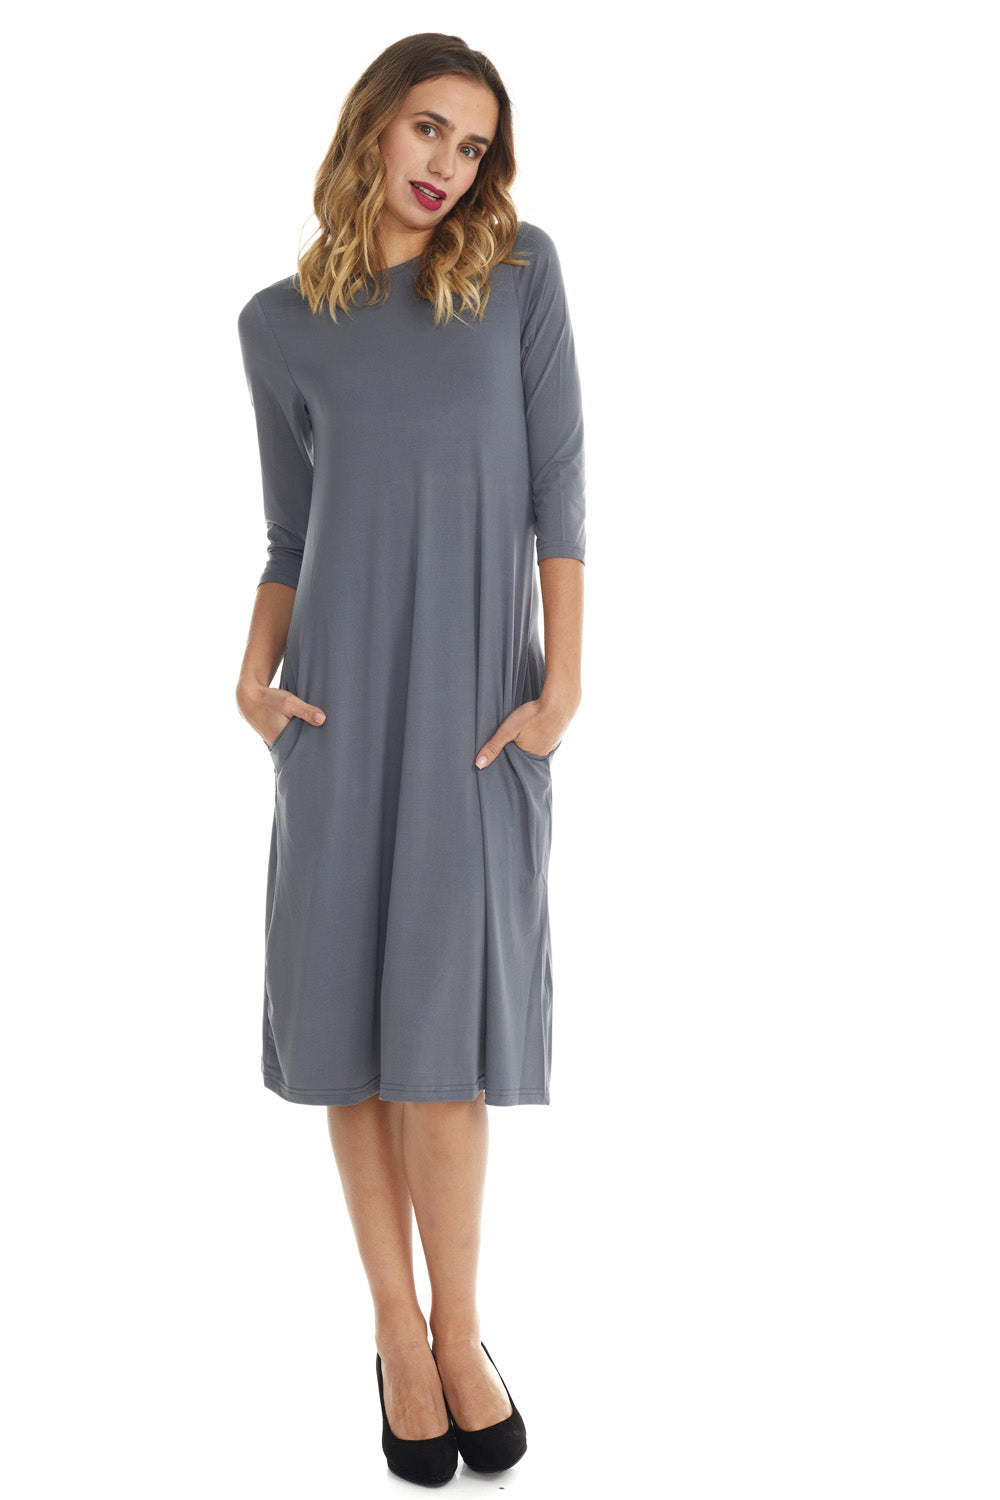 charcoal dark grey gray flary below knee length 3/4 sleeve crew neck modest tznius a-line dress with pockets